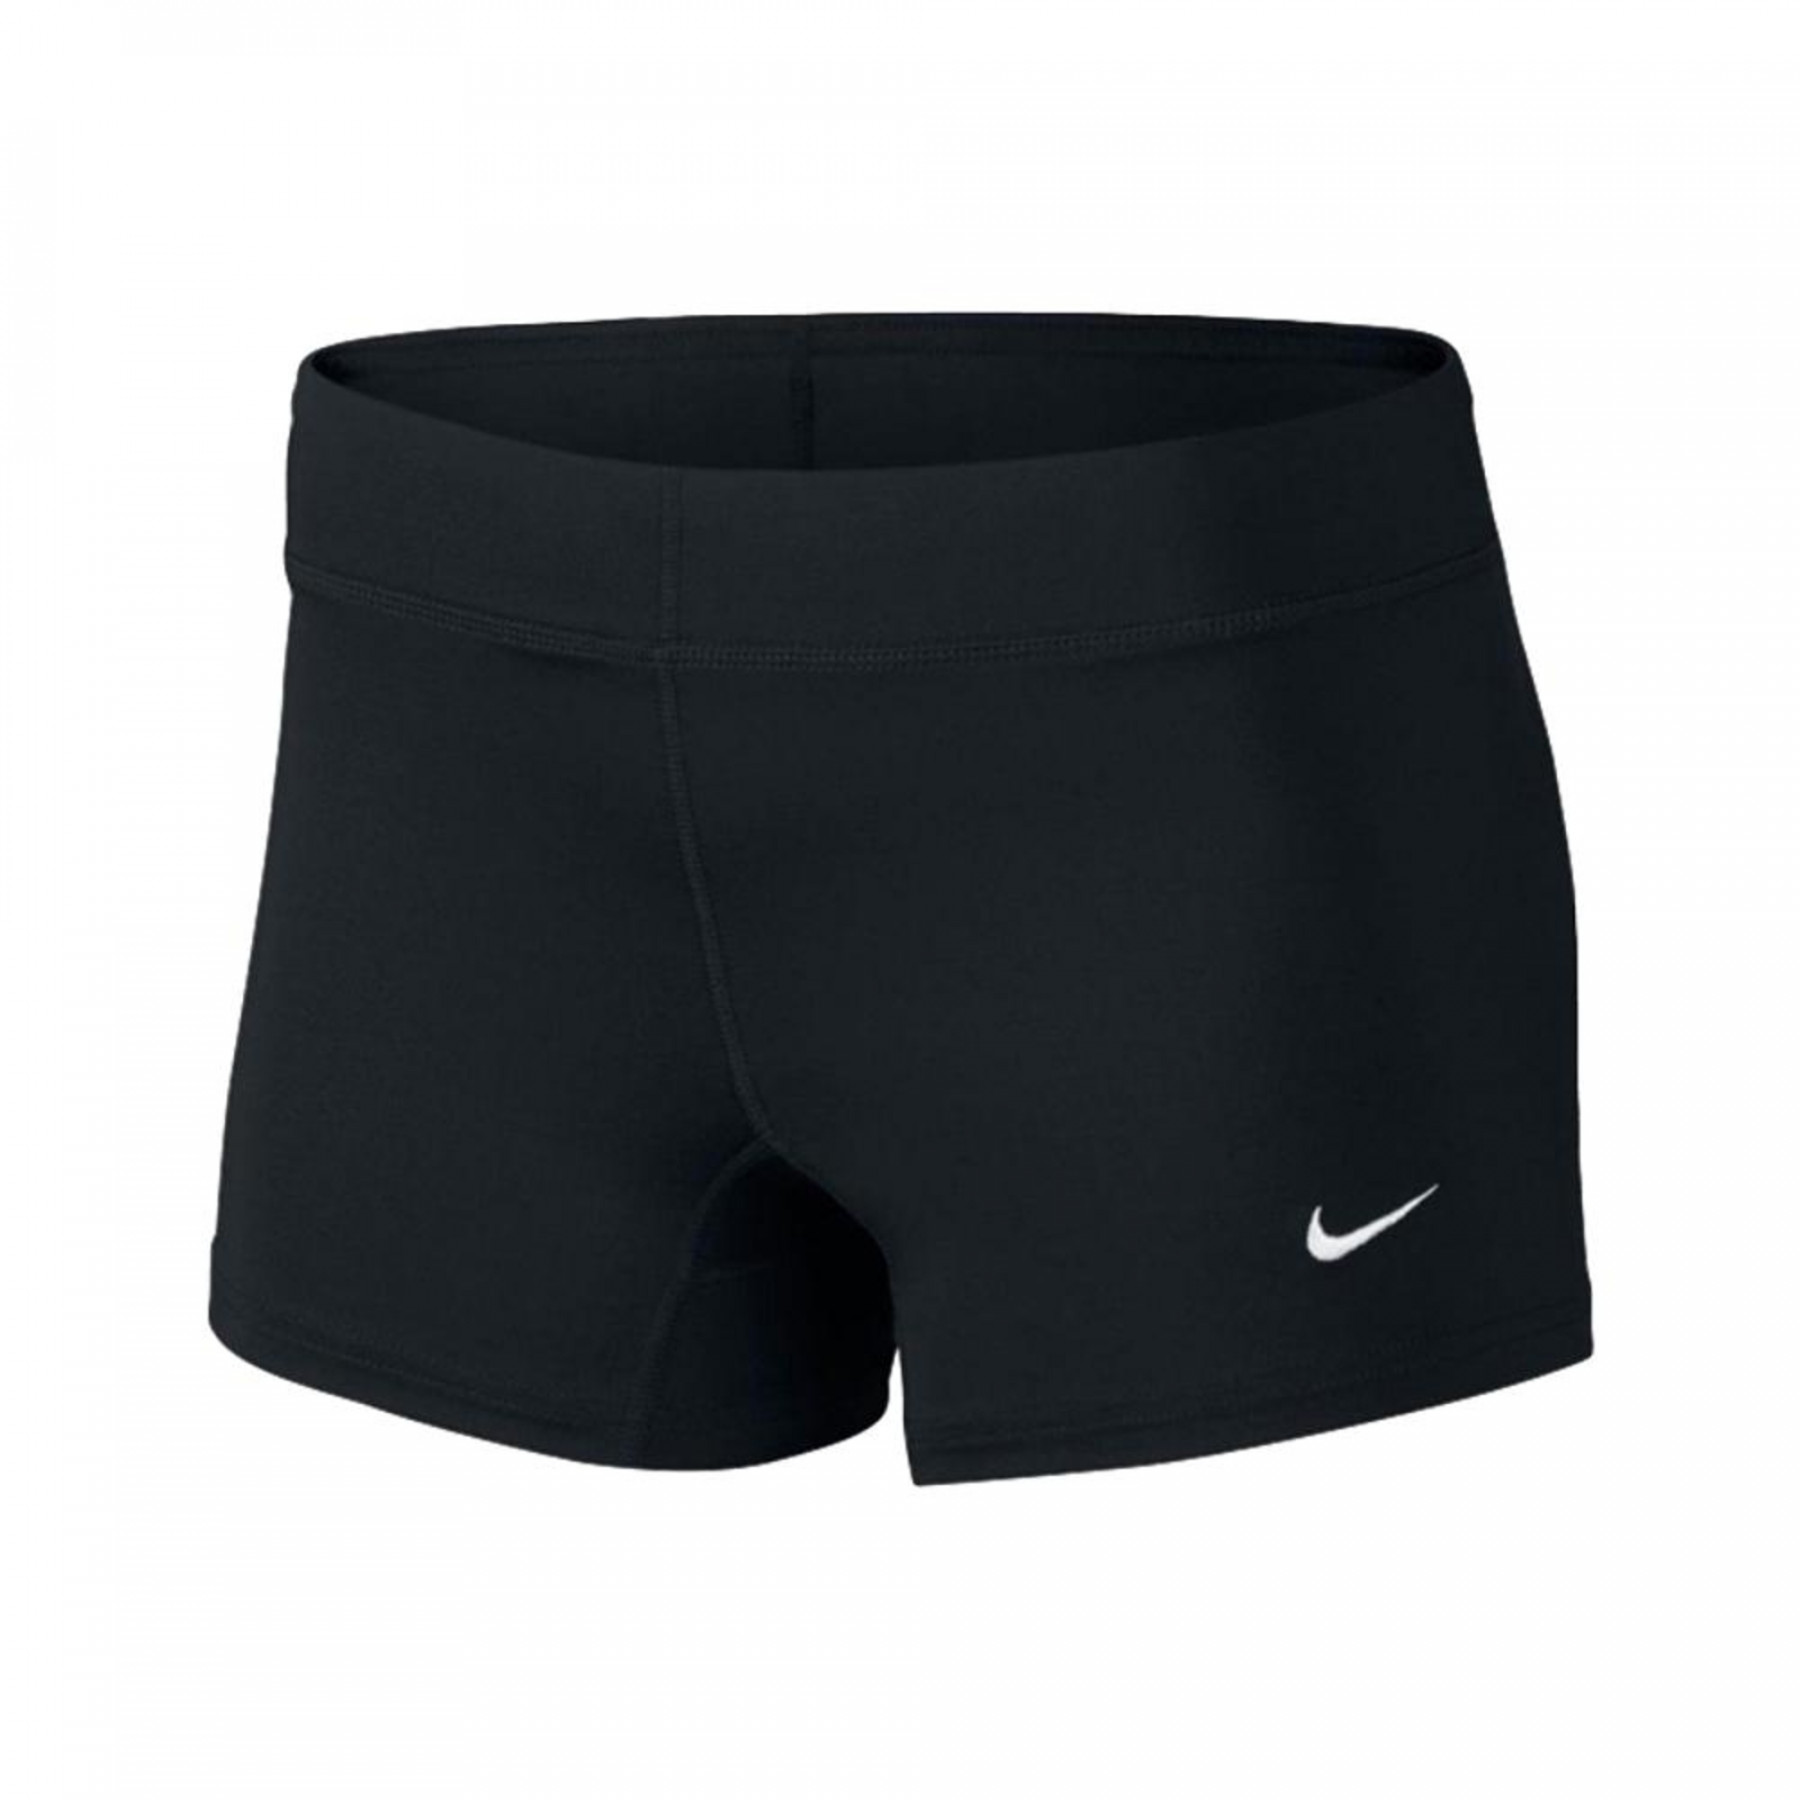 Dames shorts Nike Performance